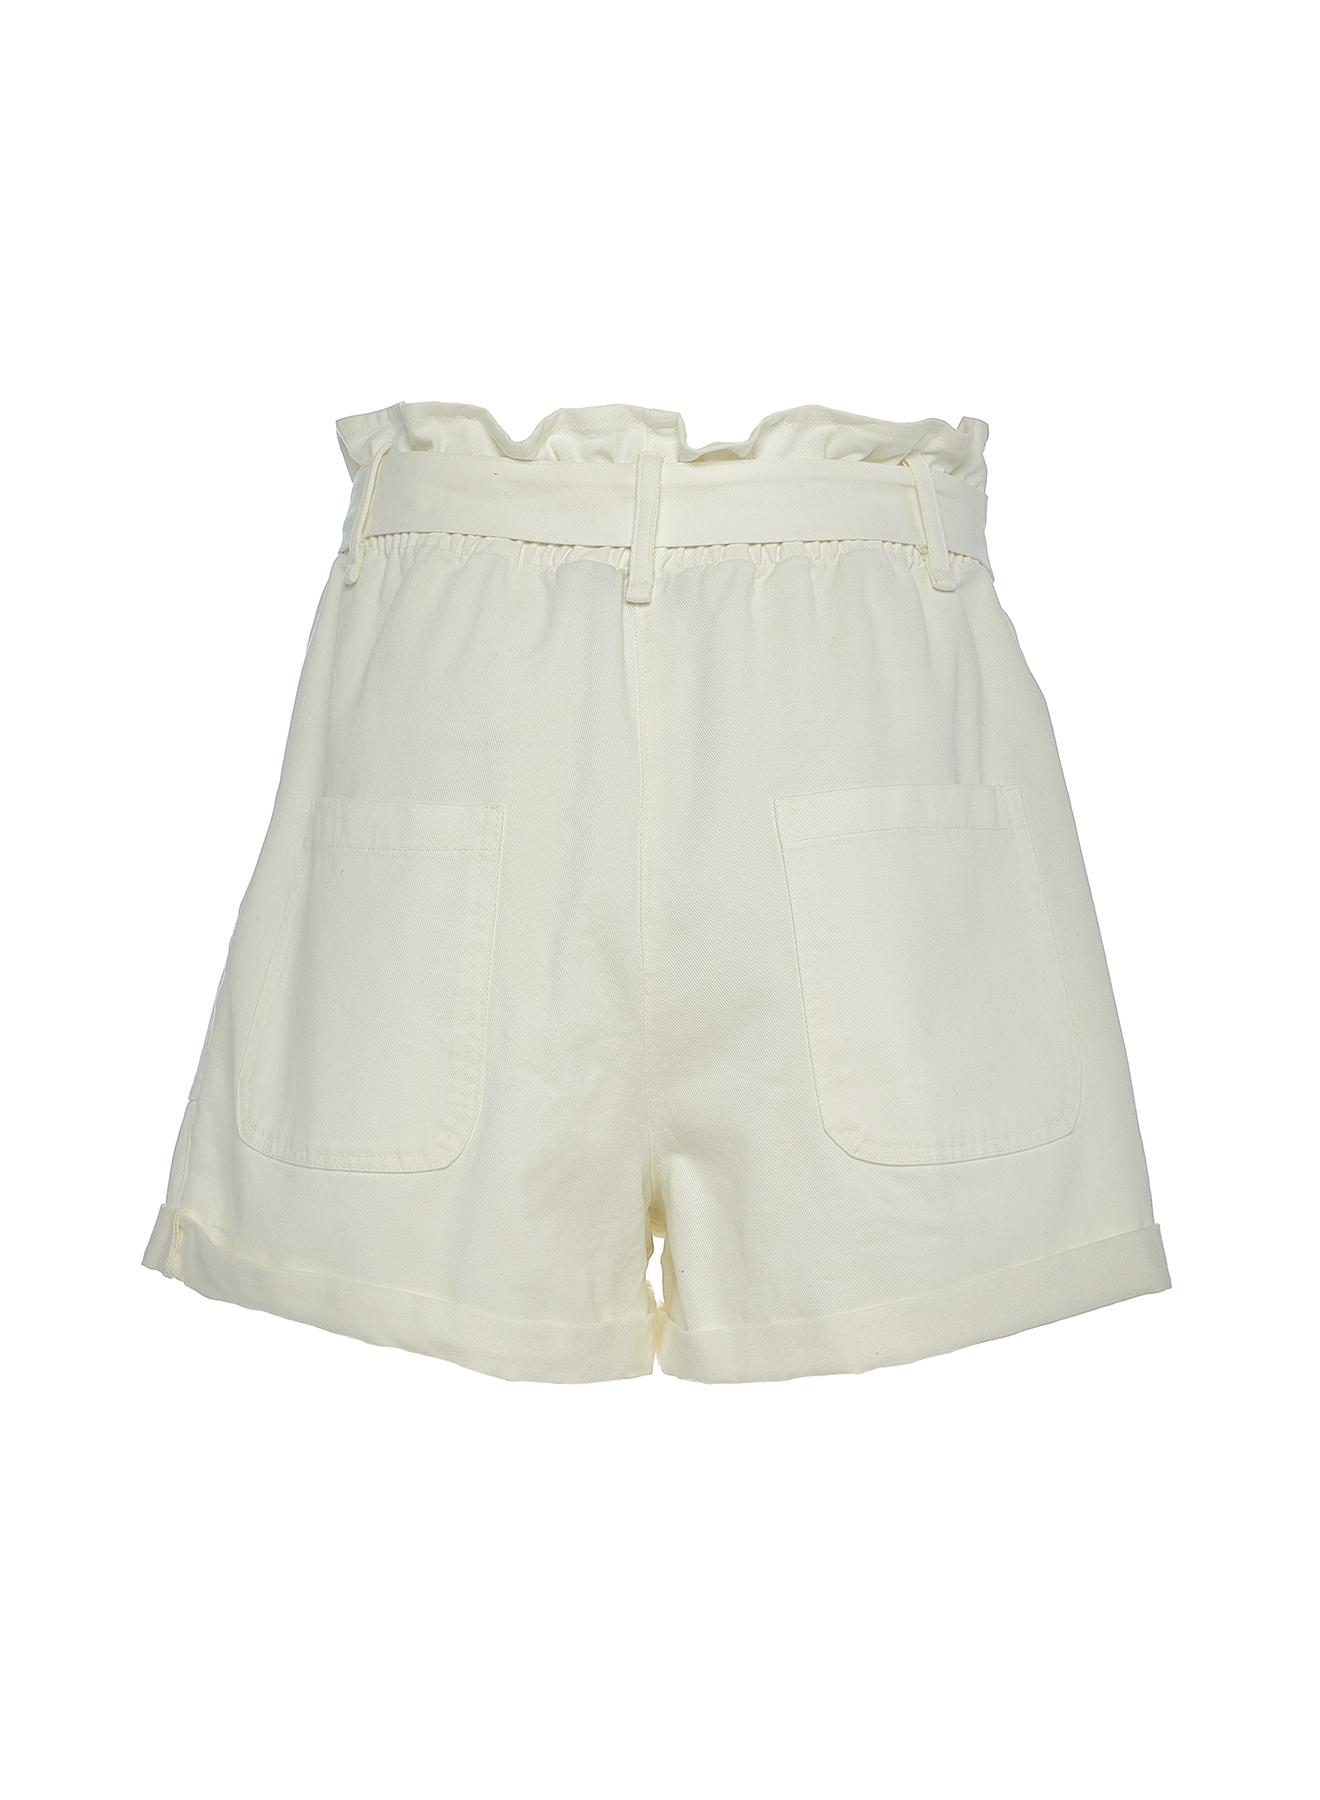 Off White denim Shorts with belt "ALMA" Devotion Twins - 3